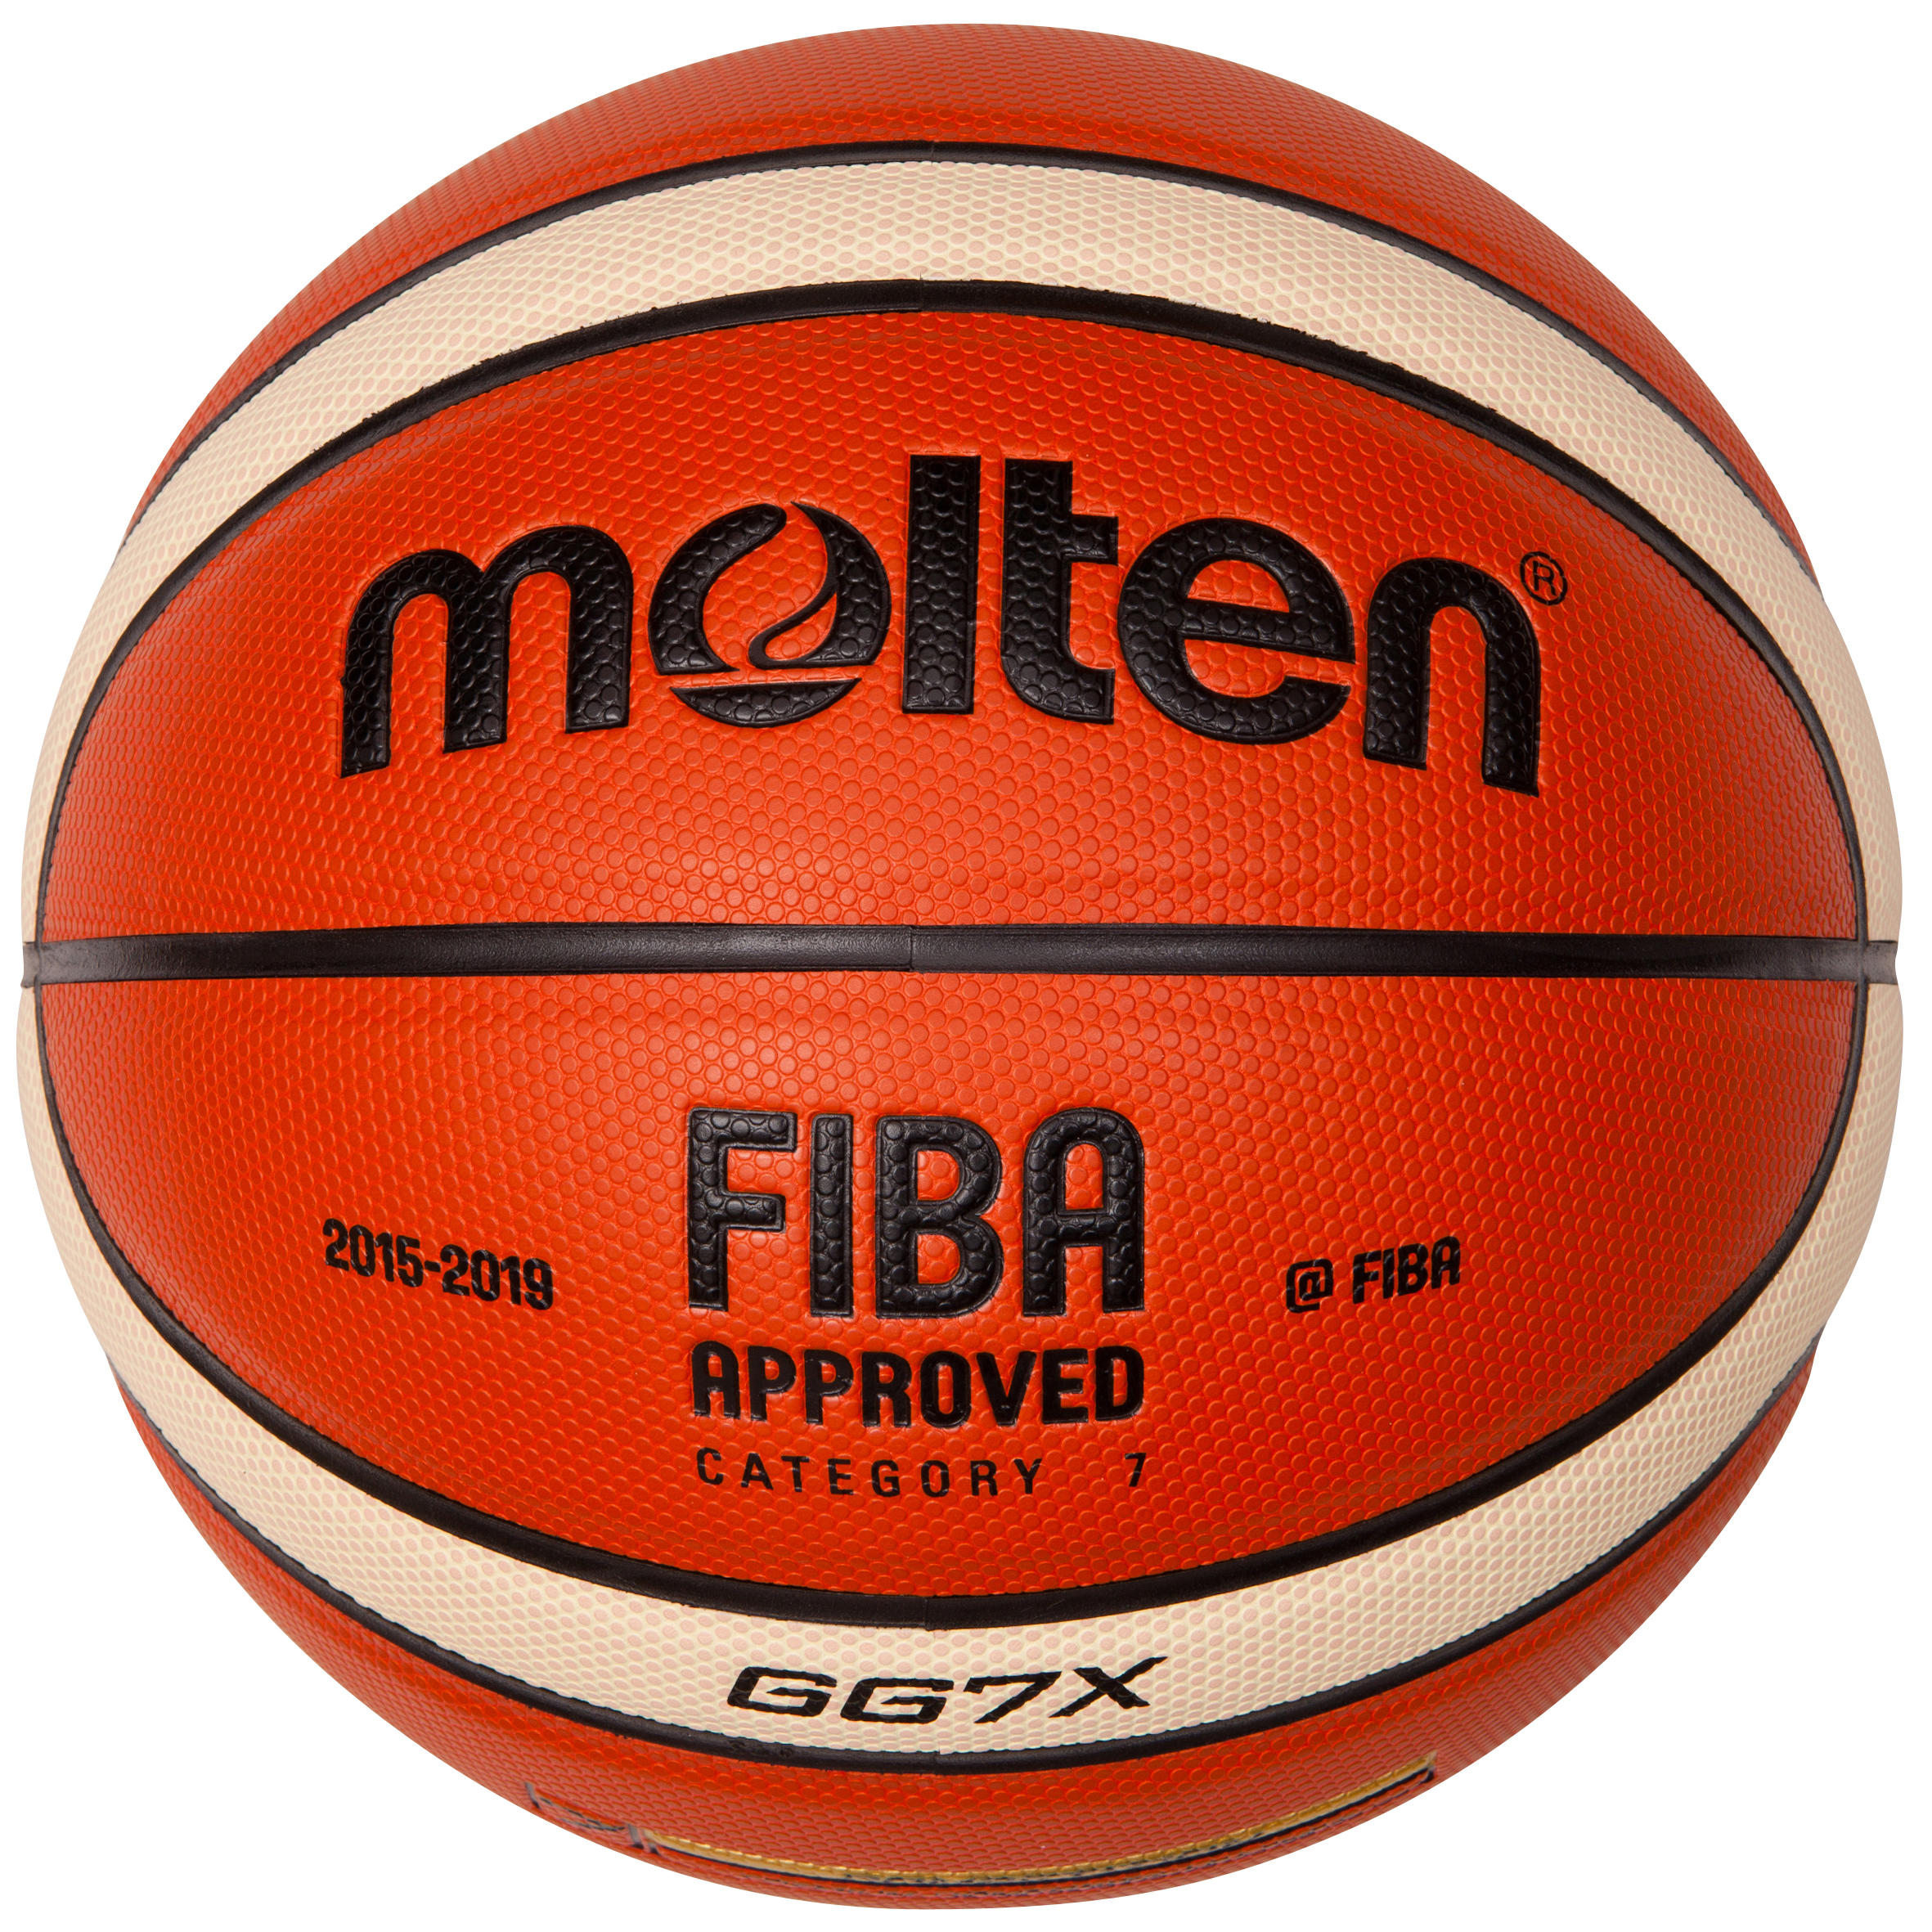 Boys'/Adult FIBA-Approved GG7X 